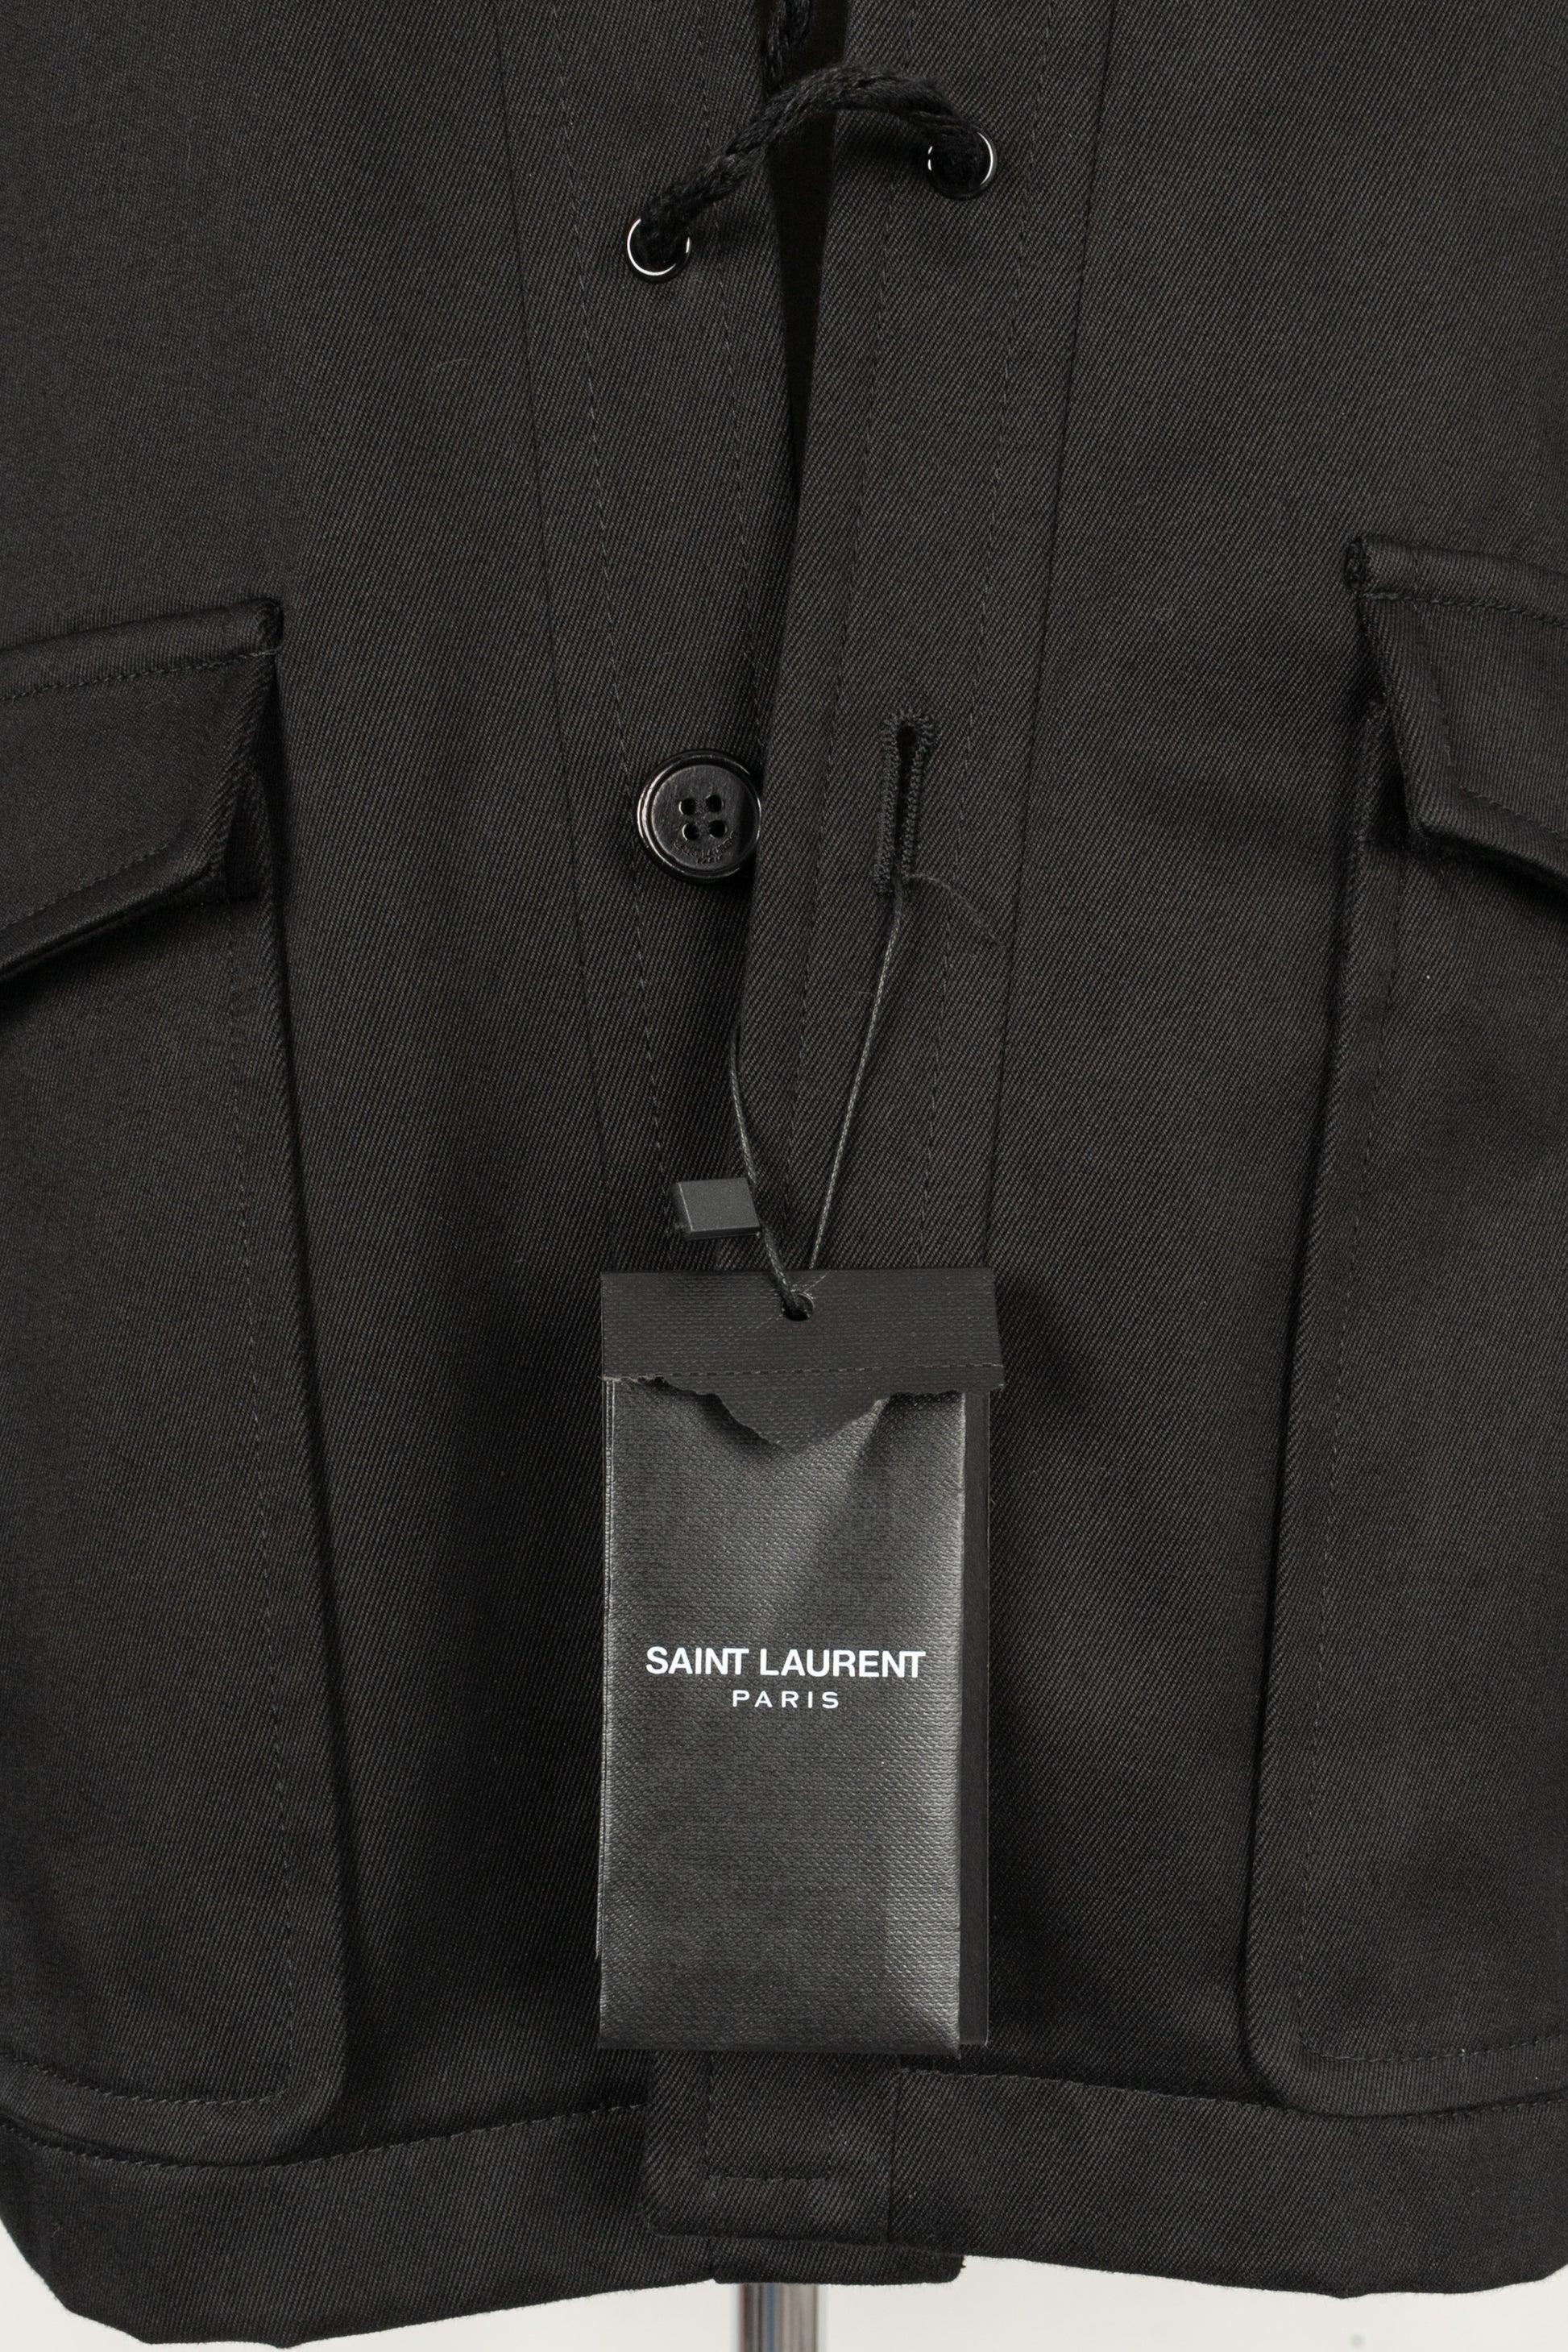 Saint Laurent Black Cotton Mid-Length Jacket Spring 40FR, 2019 5